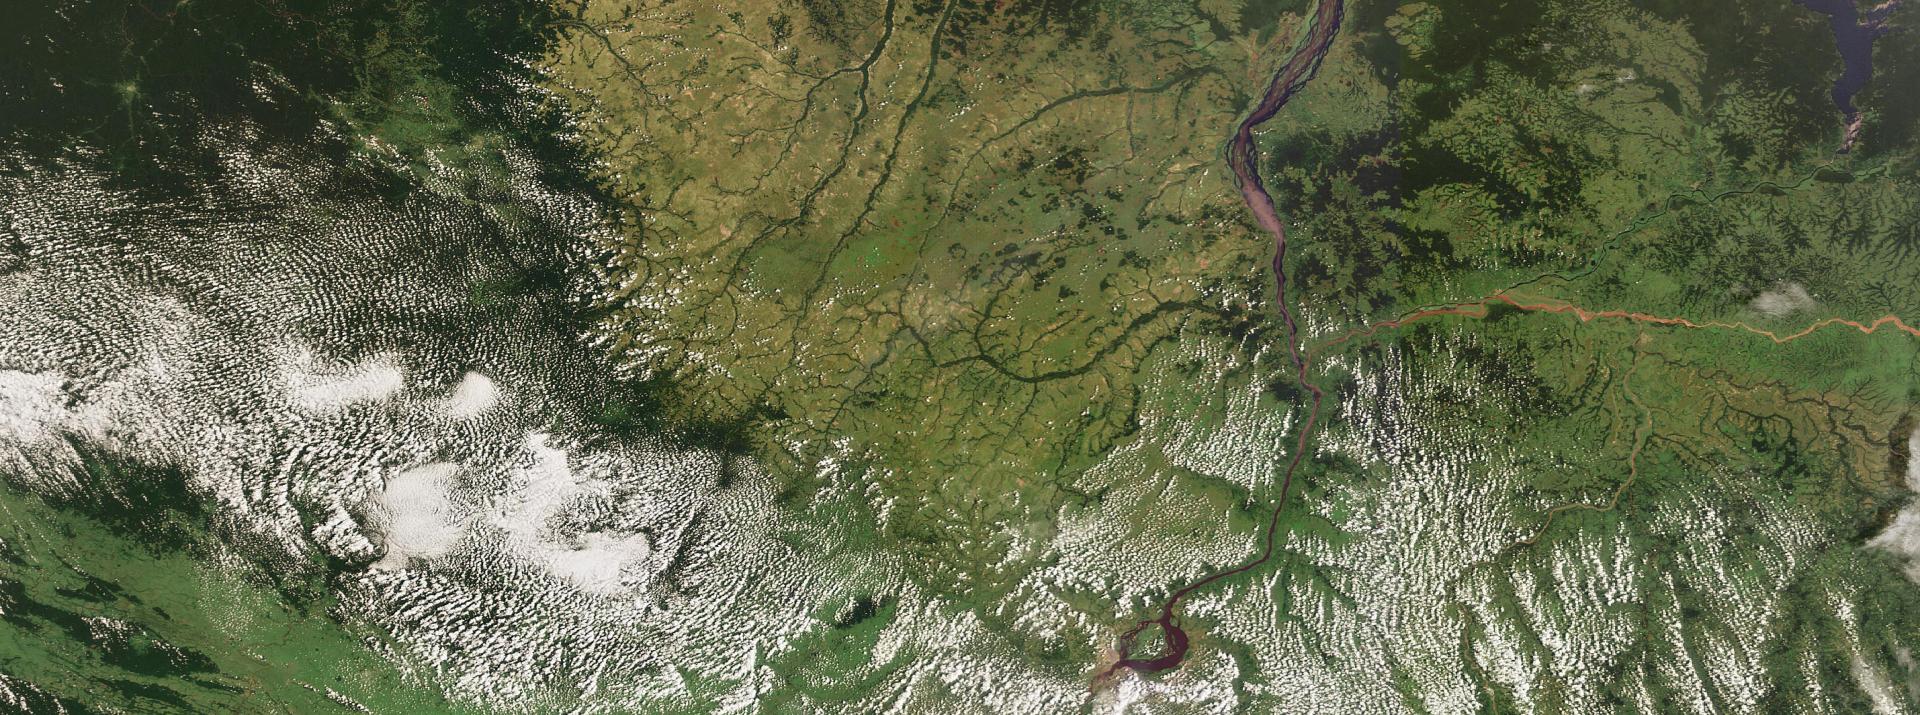 The Congo River basin - (c) ESA